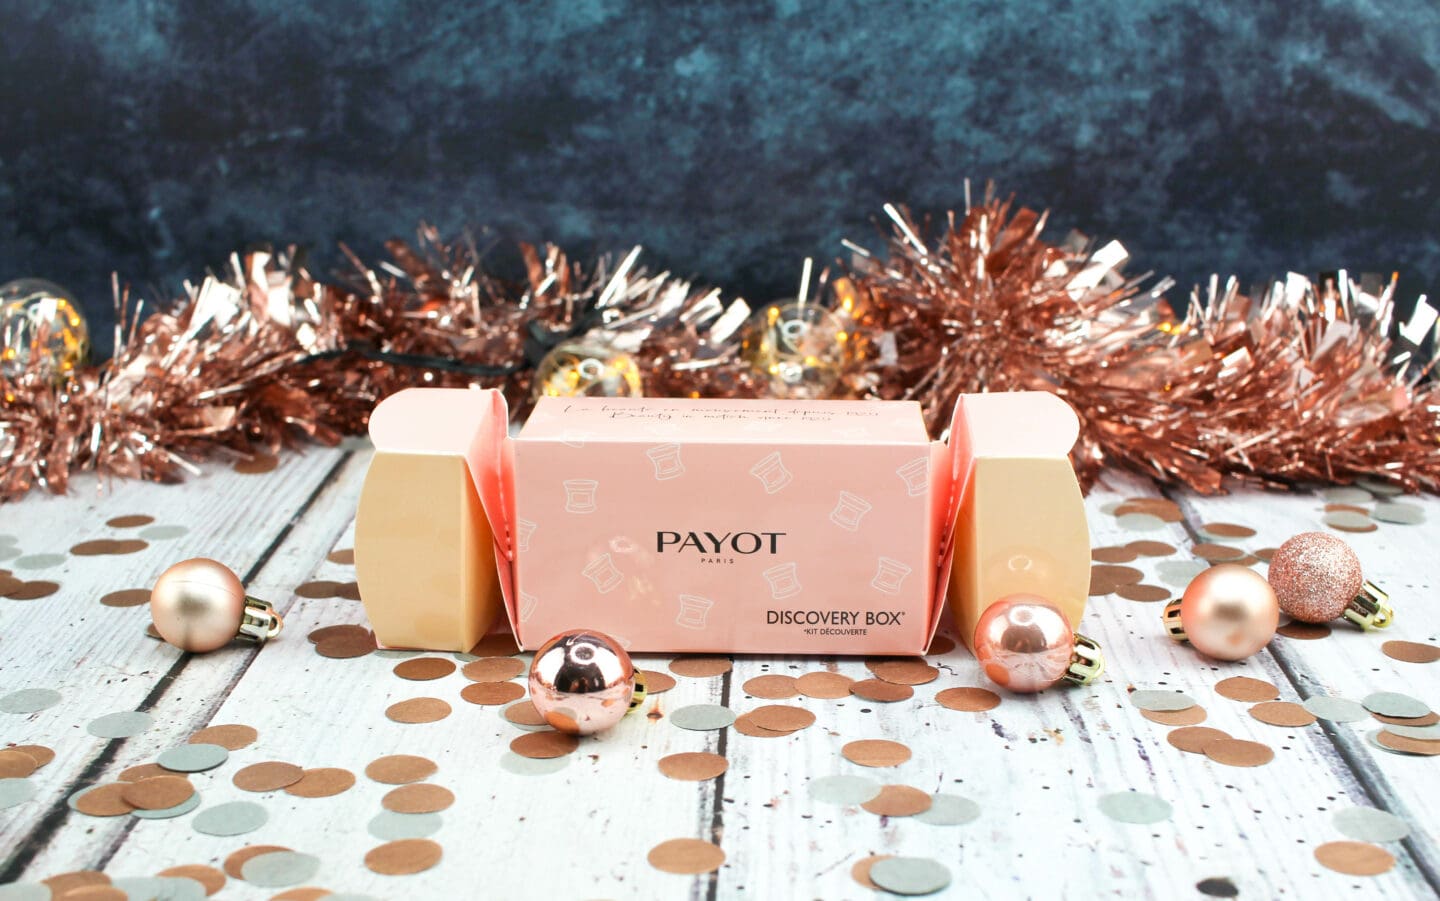 Payot Discovery Box Cracker